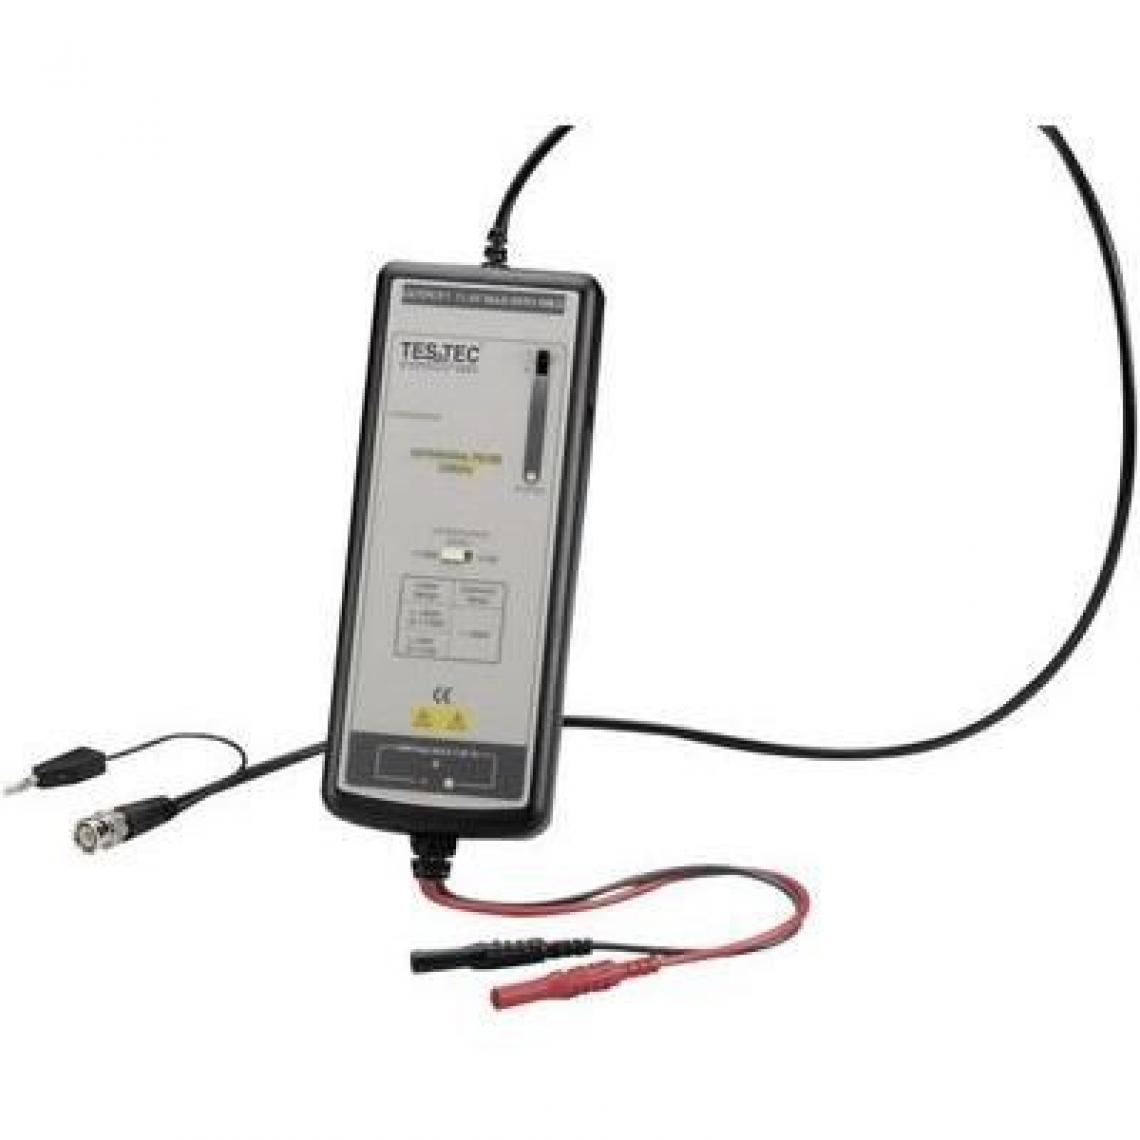 Inconnu - Sonde différentiel 100 MHz 100â€¯: 1 1000â€¯: 1 1400 V Testec TT-SI 9110 - Appareils de mesure